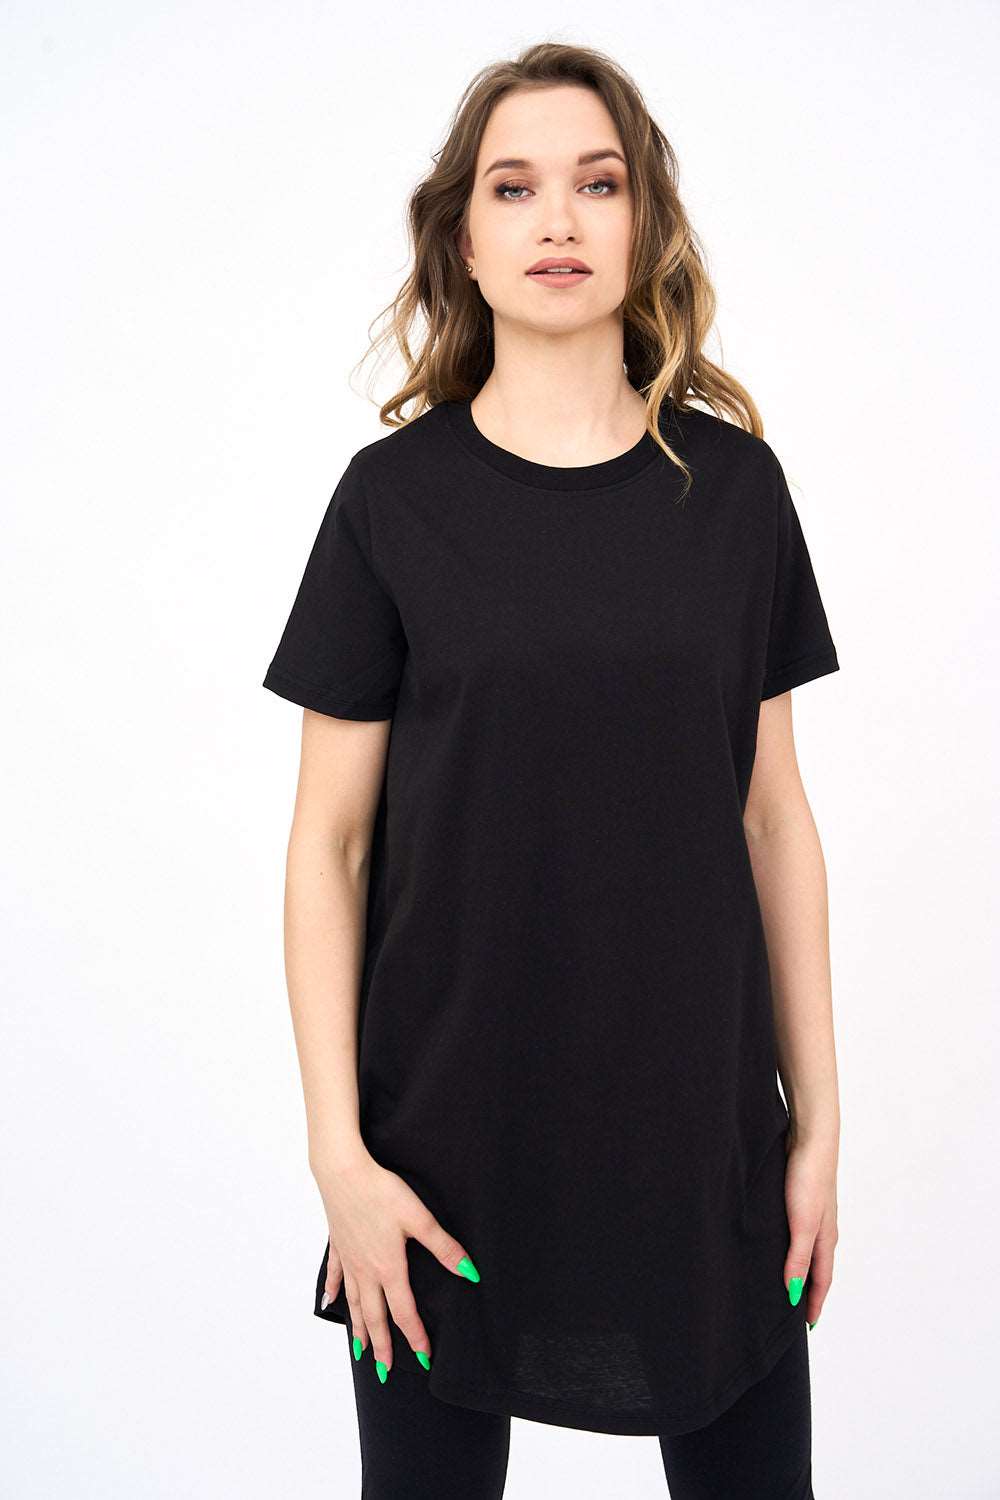 Short-Sleeved Curved Hem Womens T Shirt in Black!